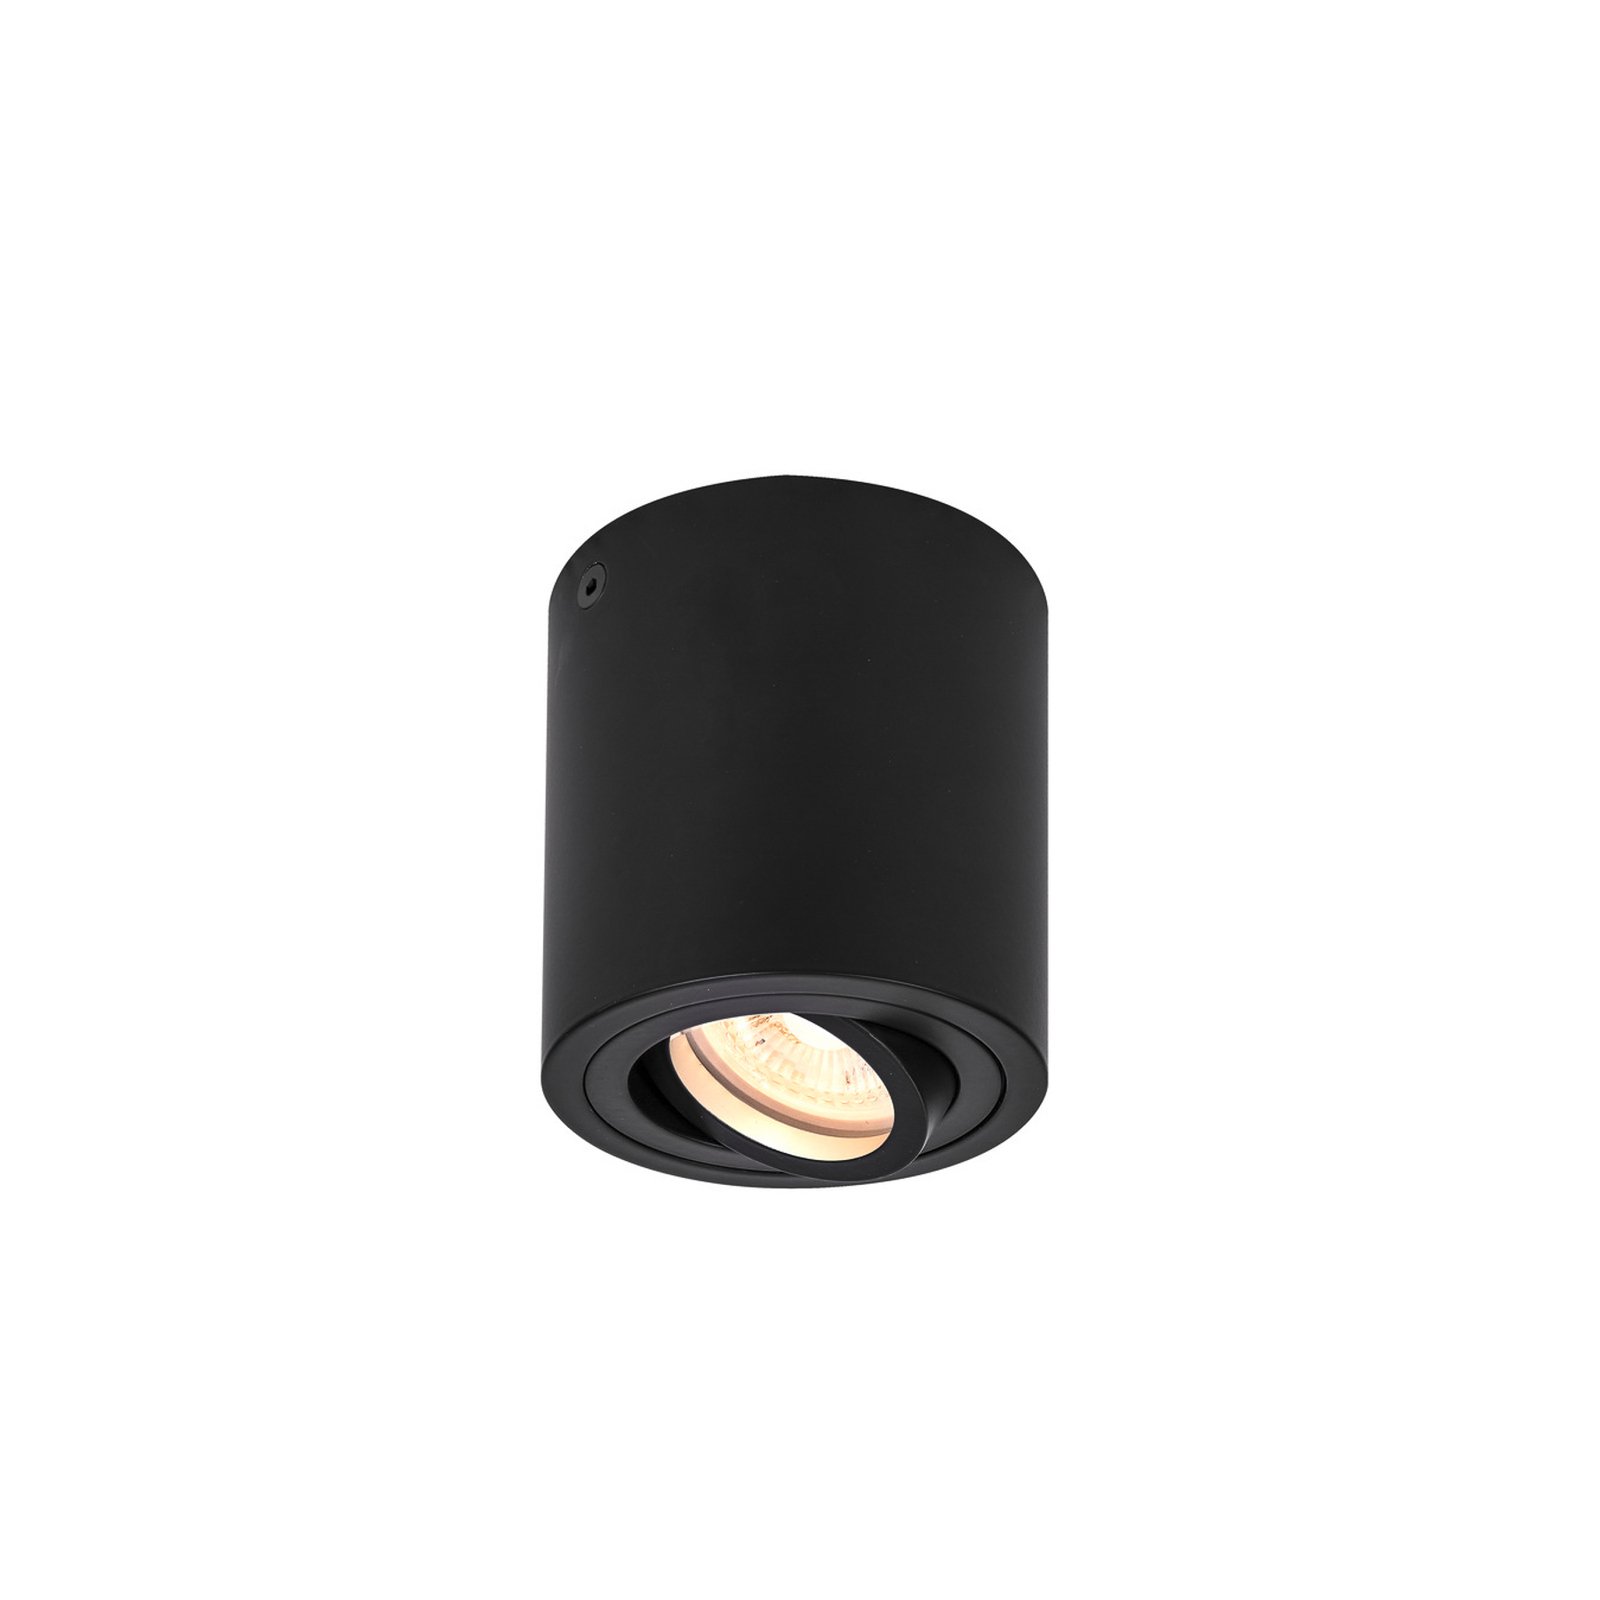 SLV Triledo plafondlamp, zwart, aluminium, Ø 10 cm